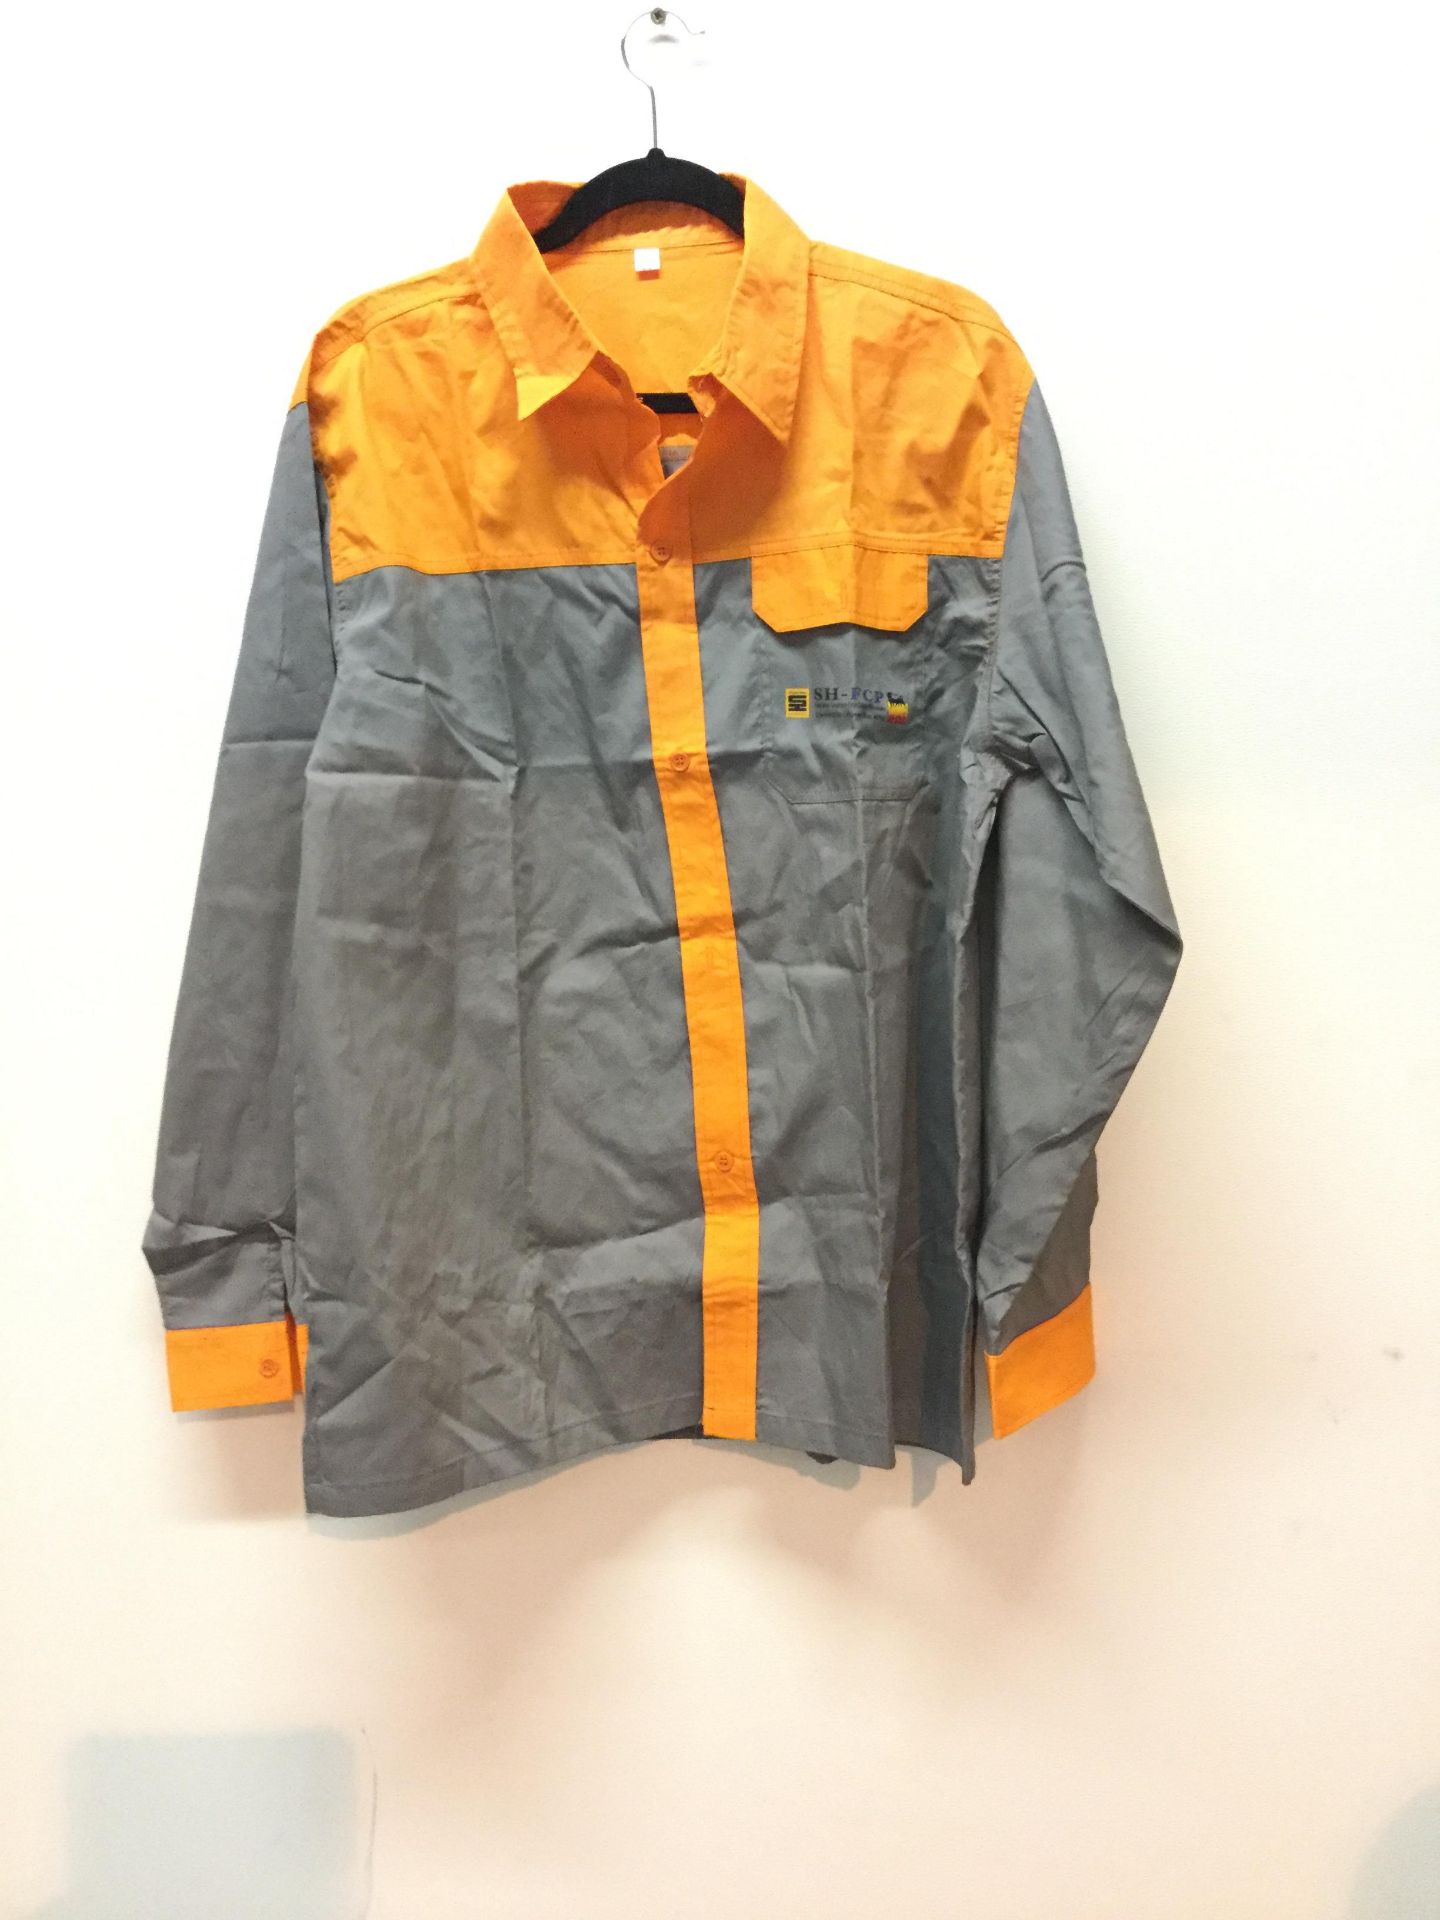 Summer Long Sleeve Work Shirt - Size 54 - Image 2 of 2